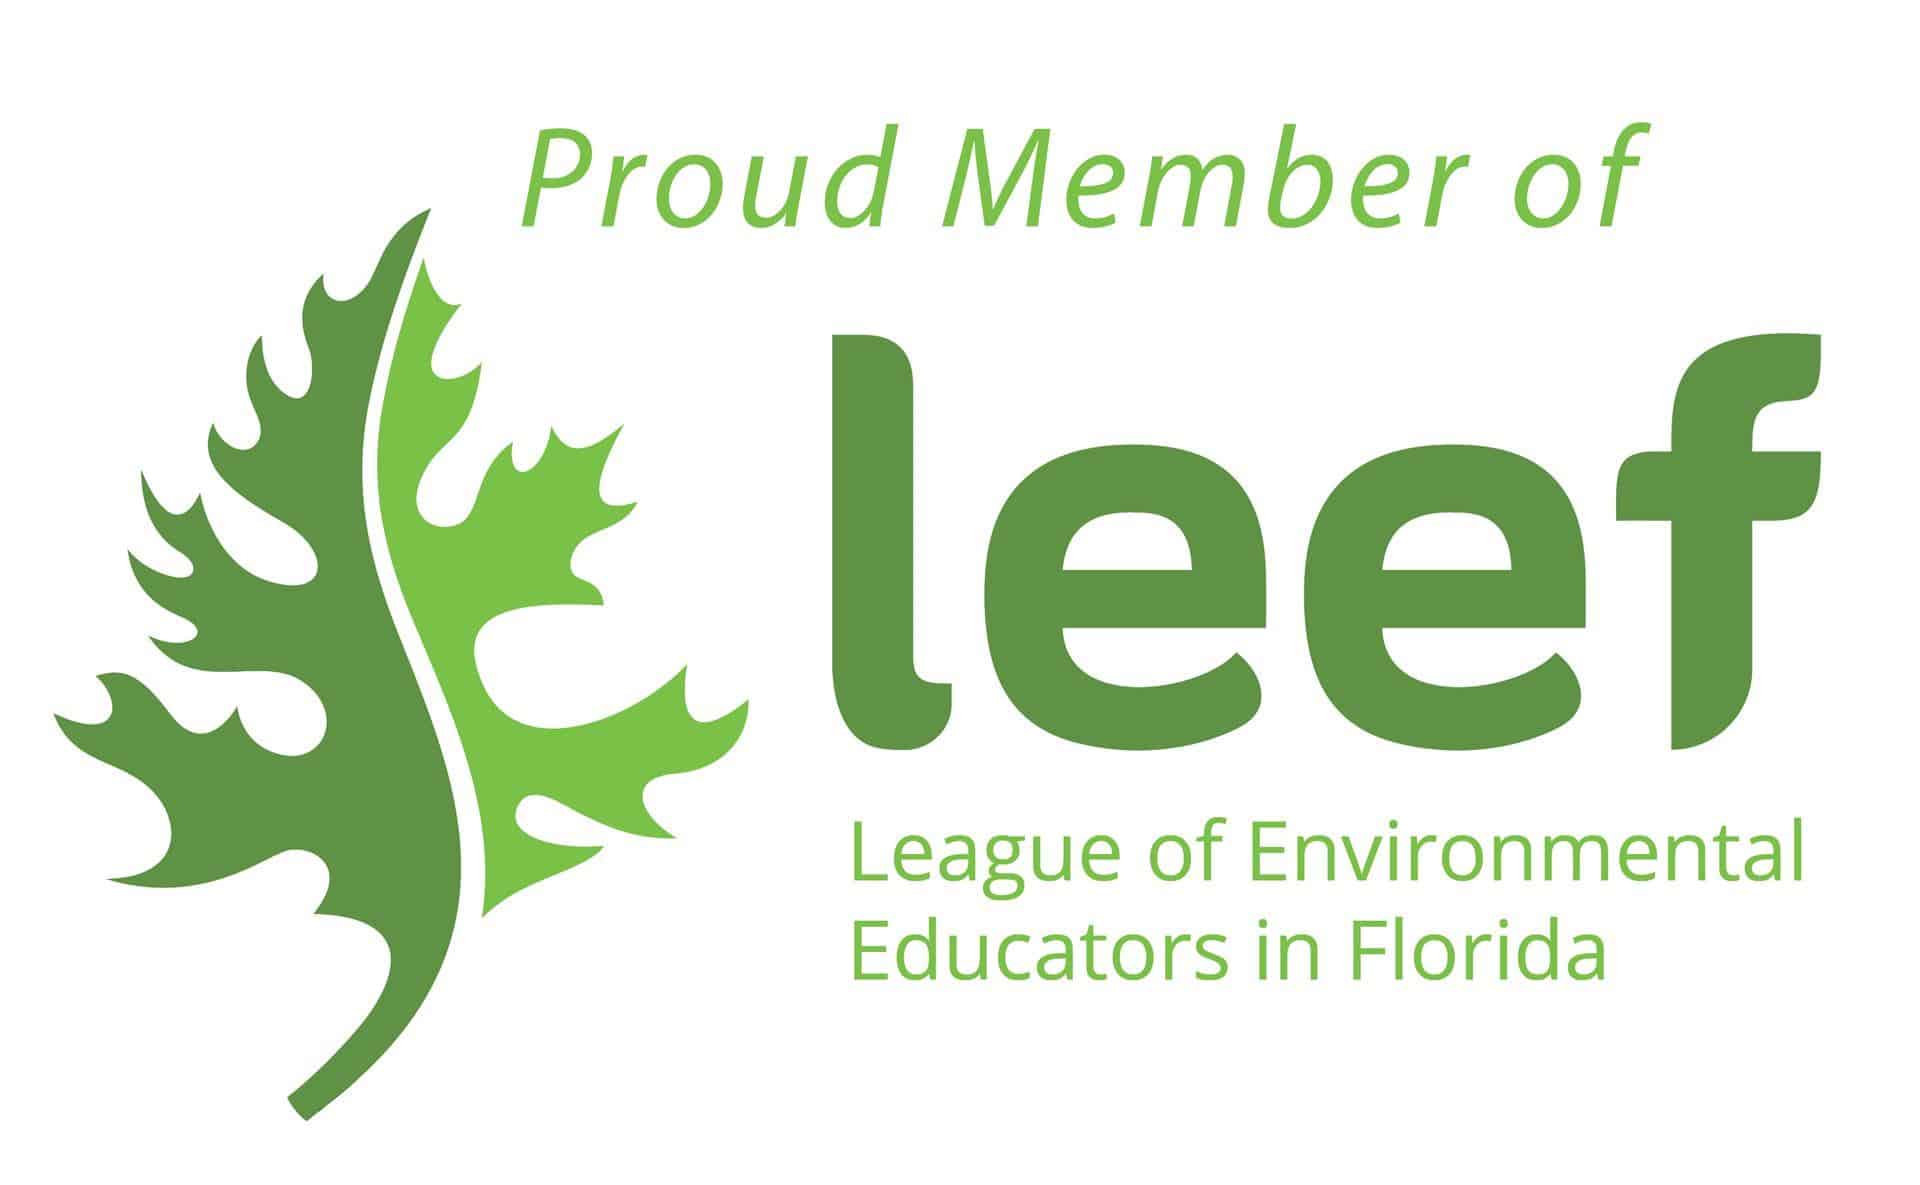 League of Environmental Educators in Florida